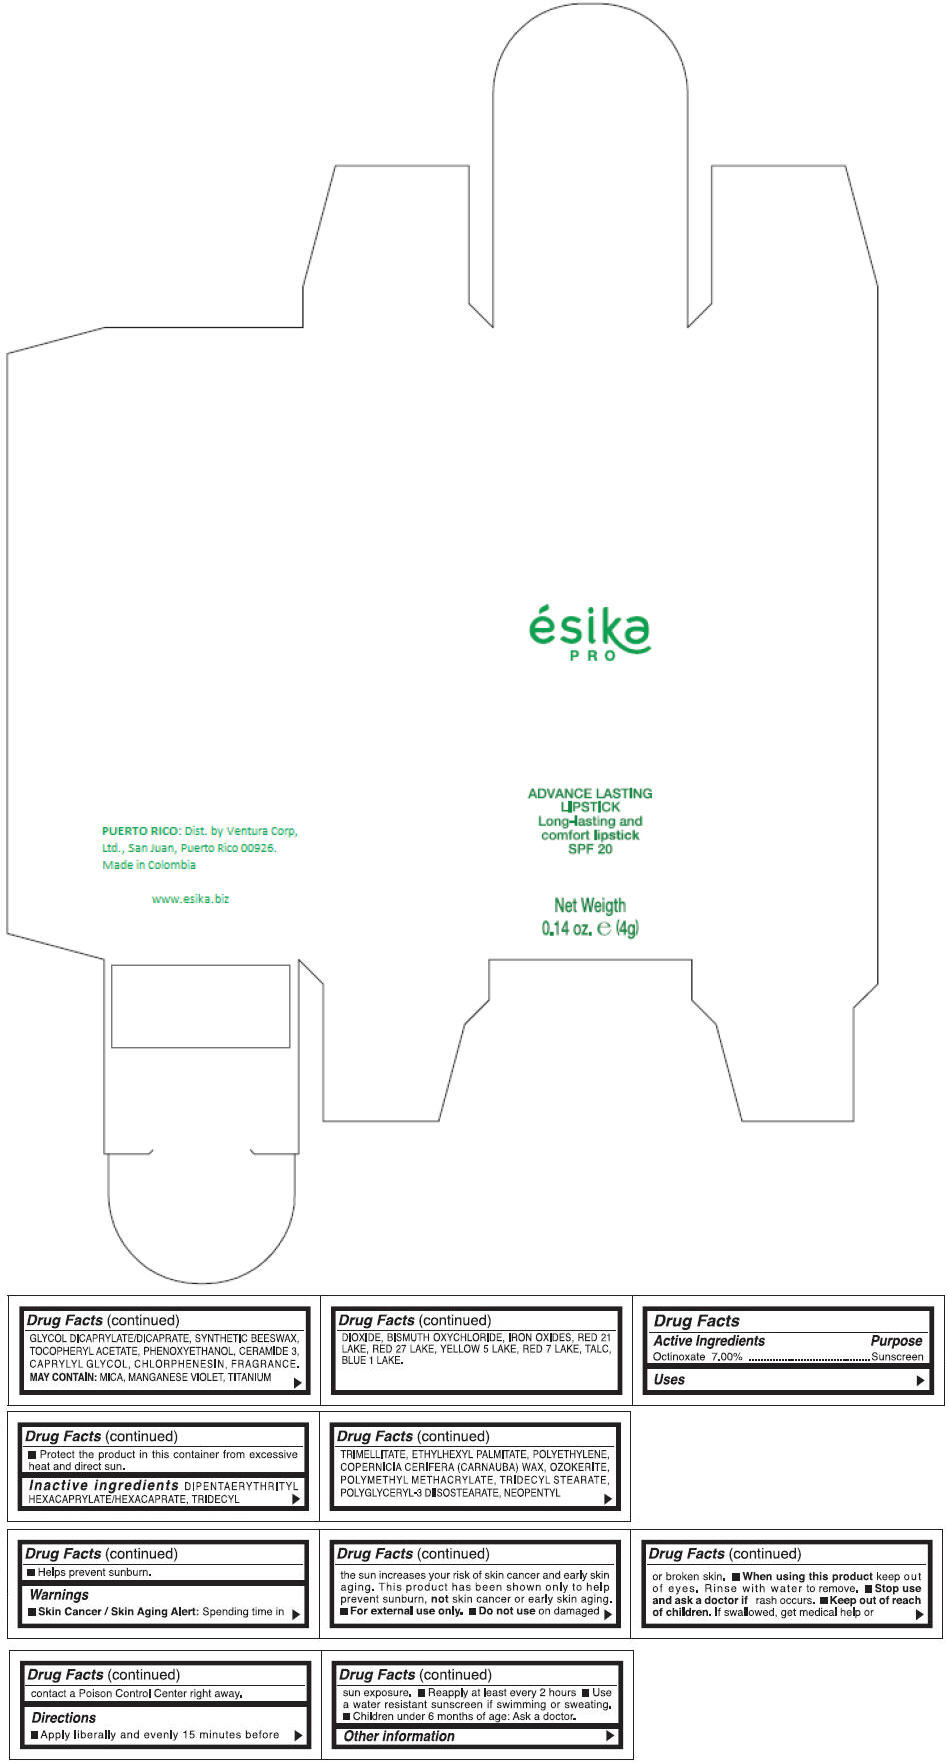 PRINCIPAL DISPLAY PANEL - 4 g Tube Box - (ROSA FIORELLE) - PINK